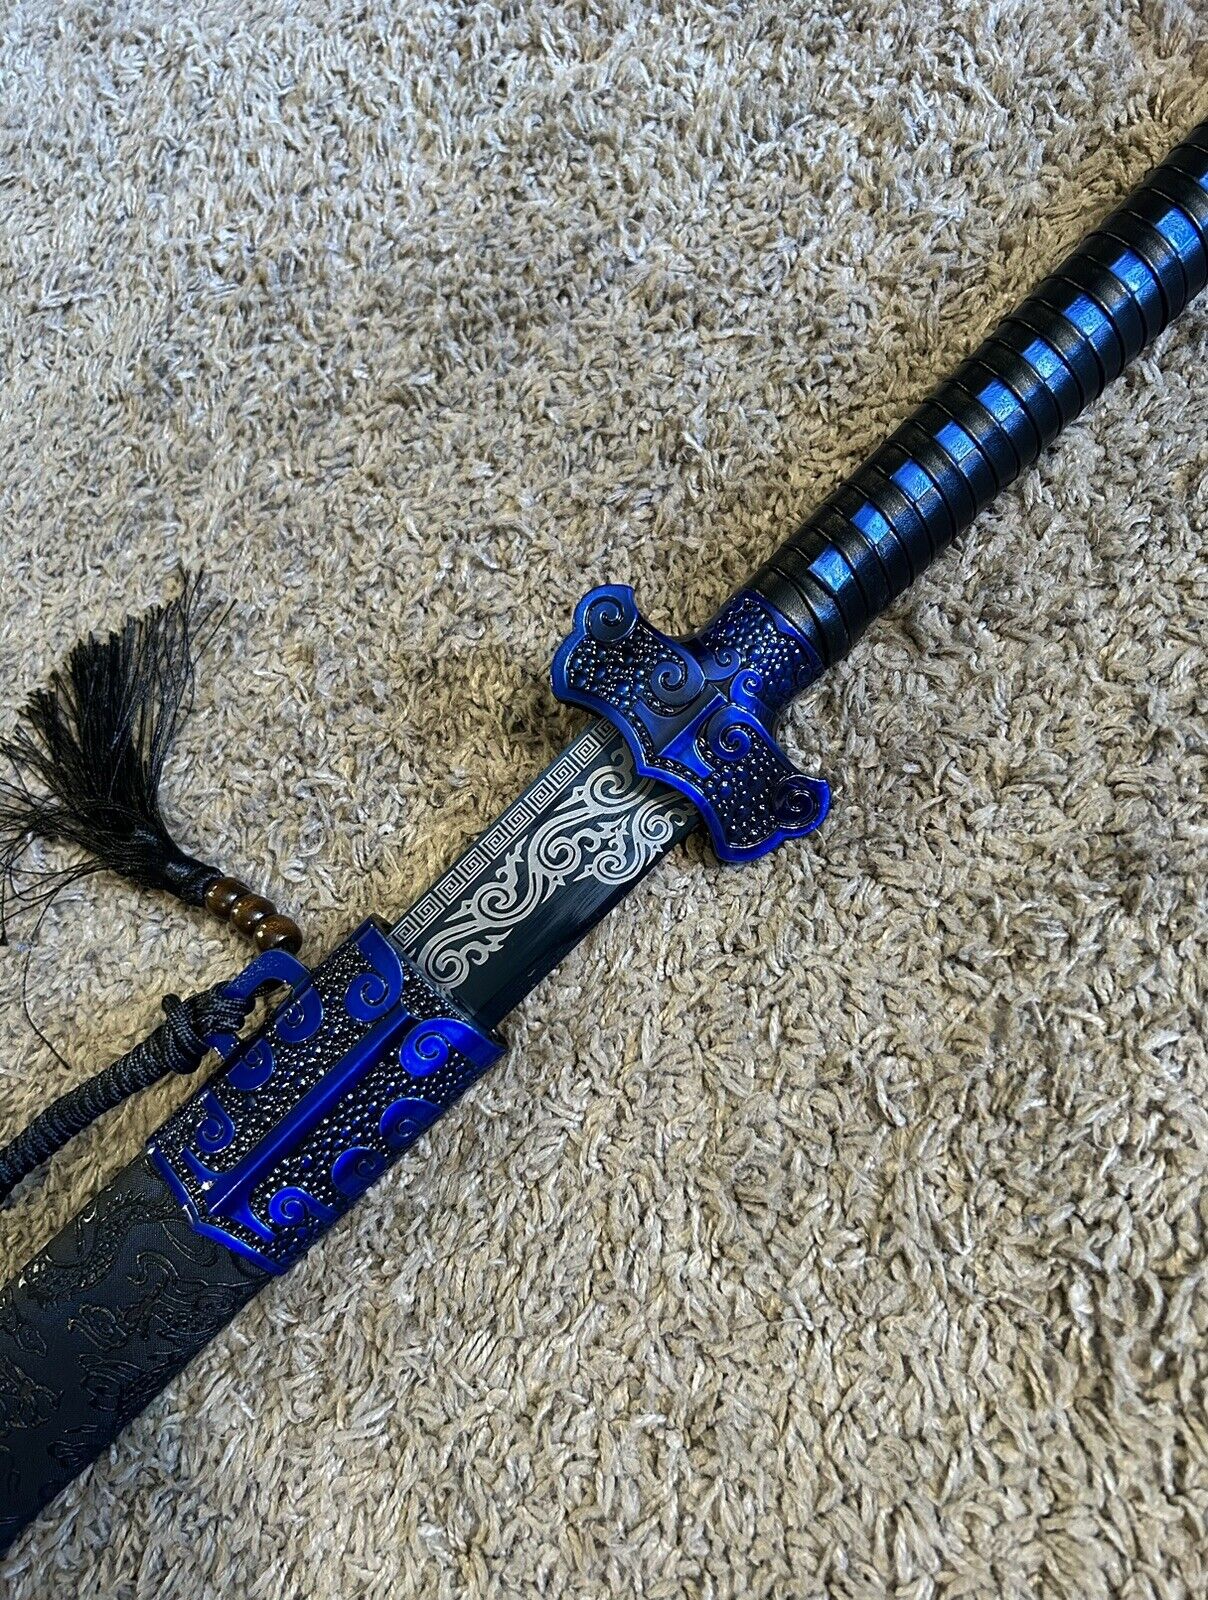 Blue Sharp Ninja Sword 1095 Carbon Steel Japanese Straight Ninjato Broadsword